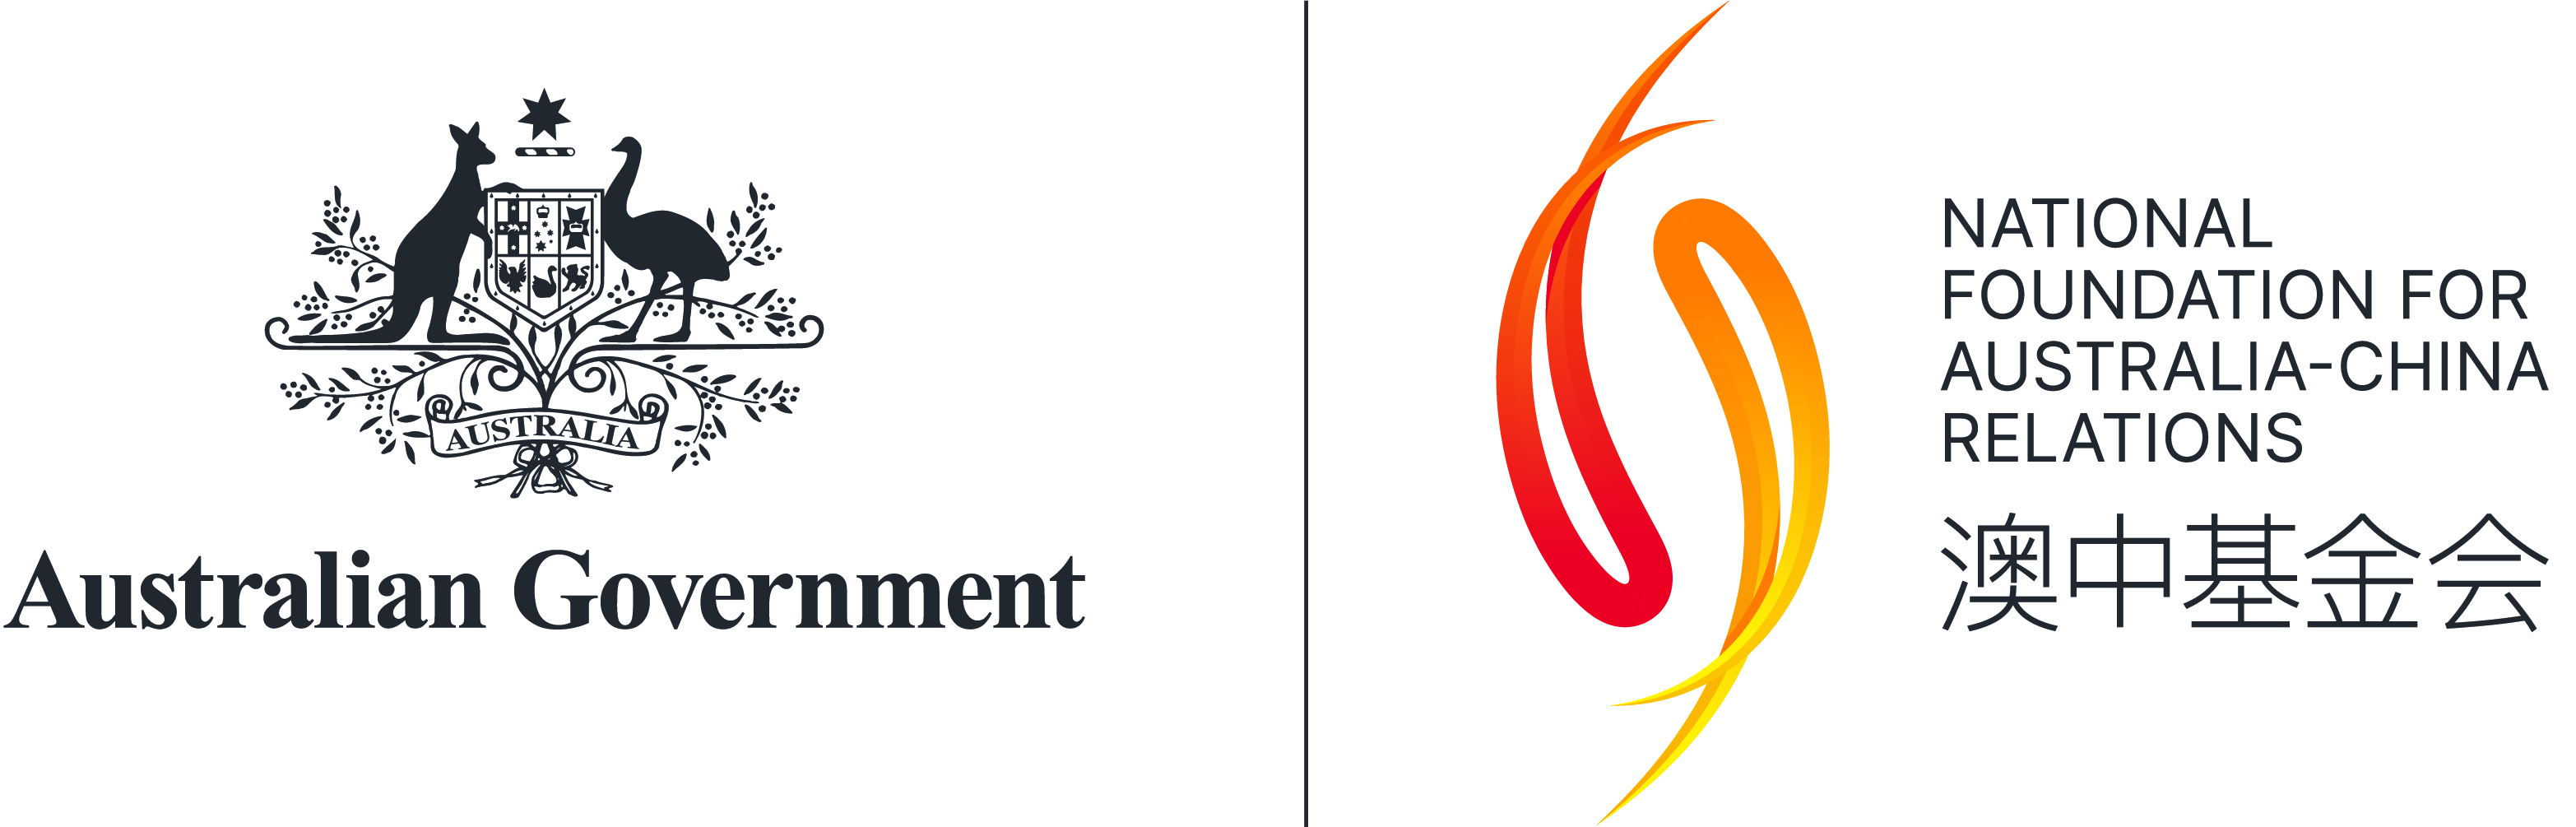 Logo National Foundation for Australia-China Relations